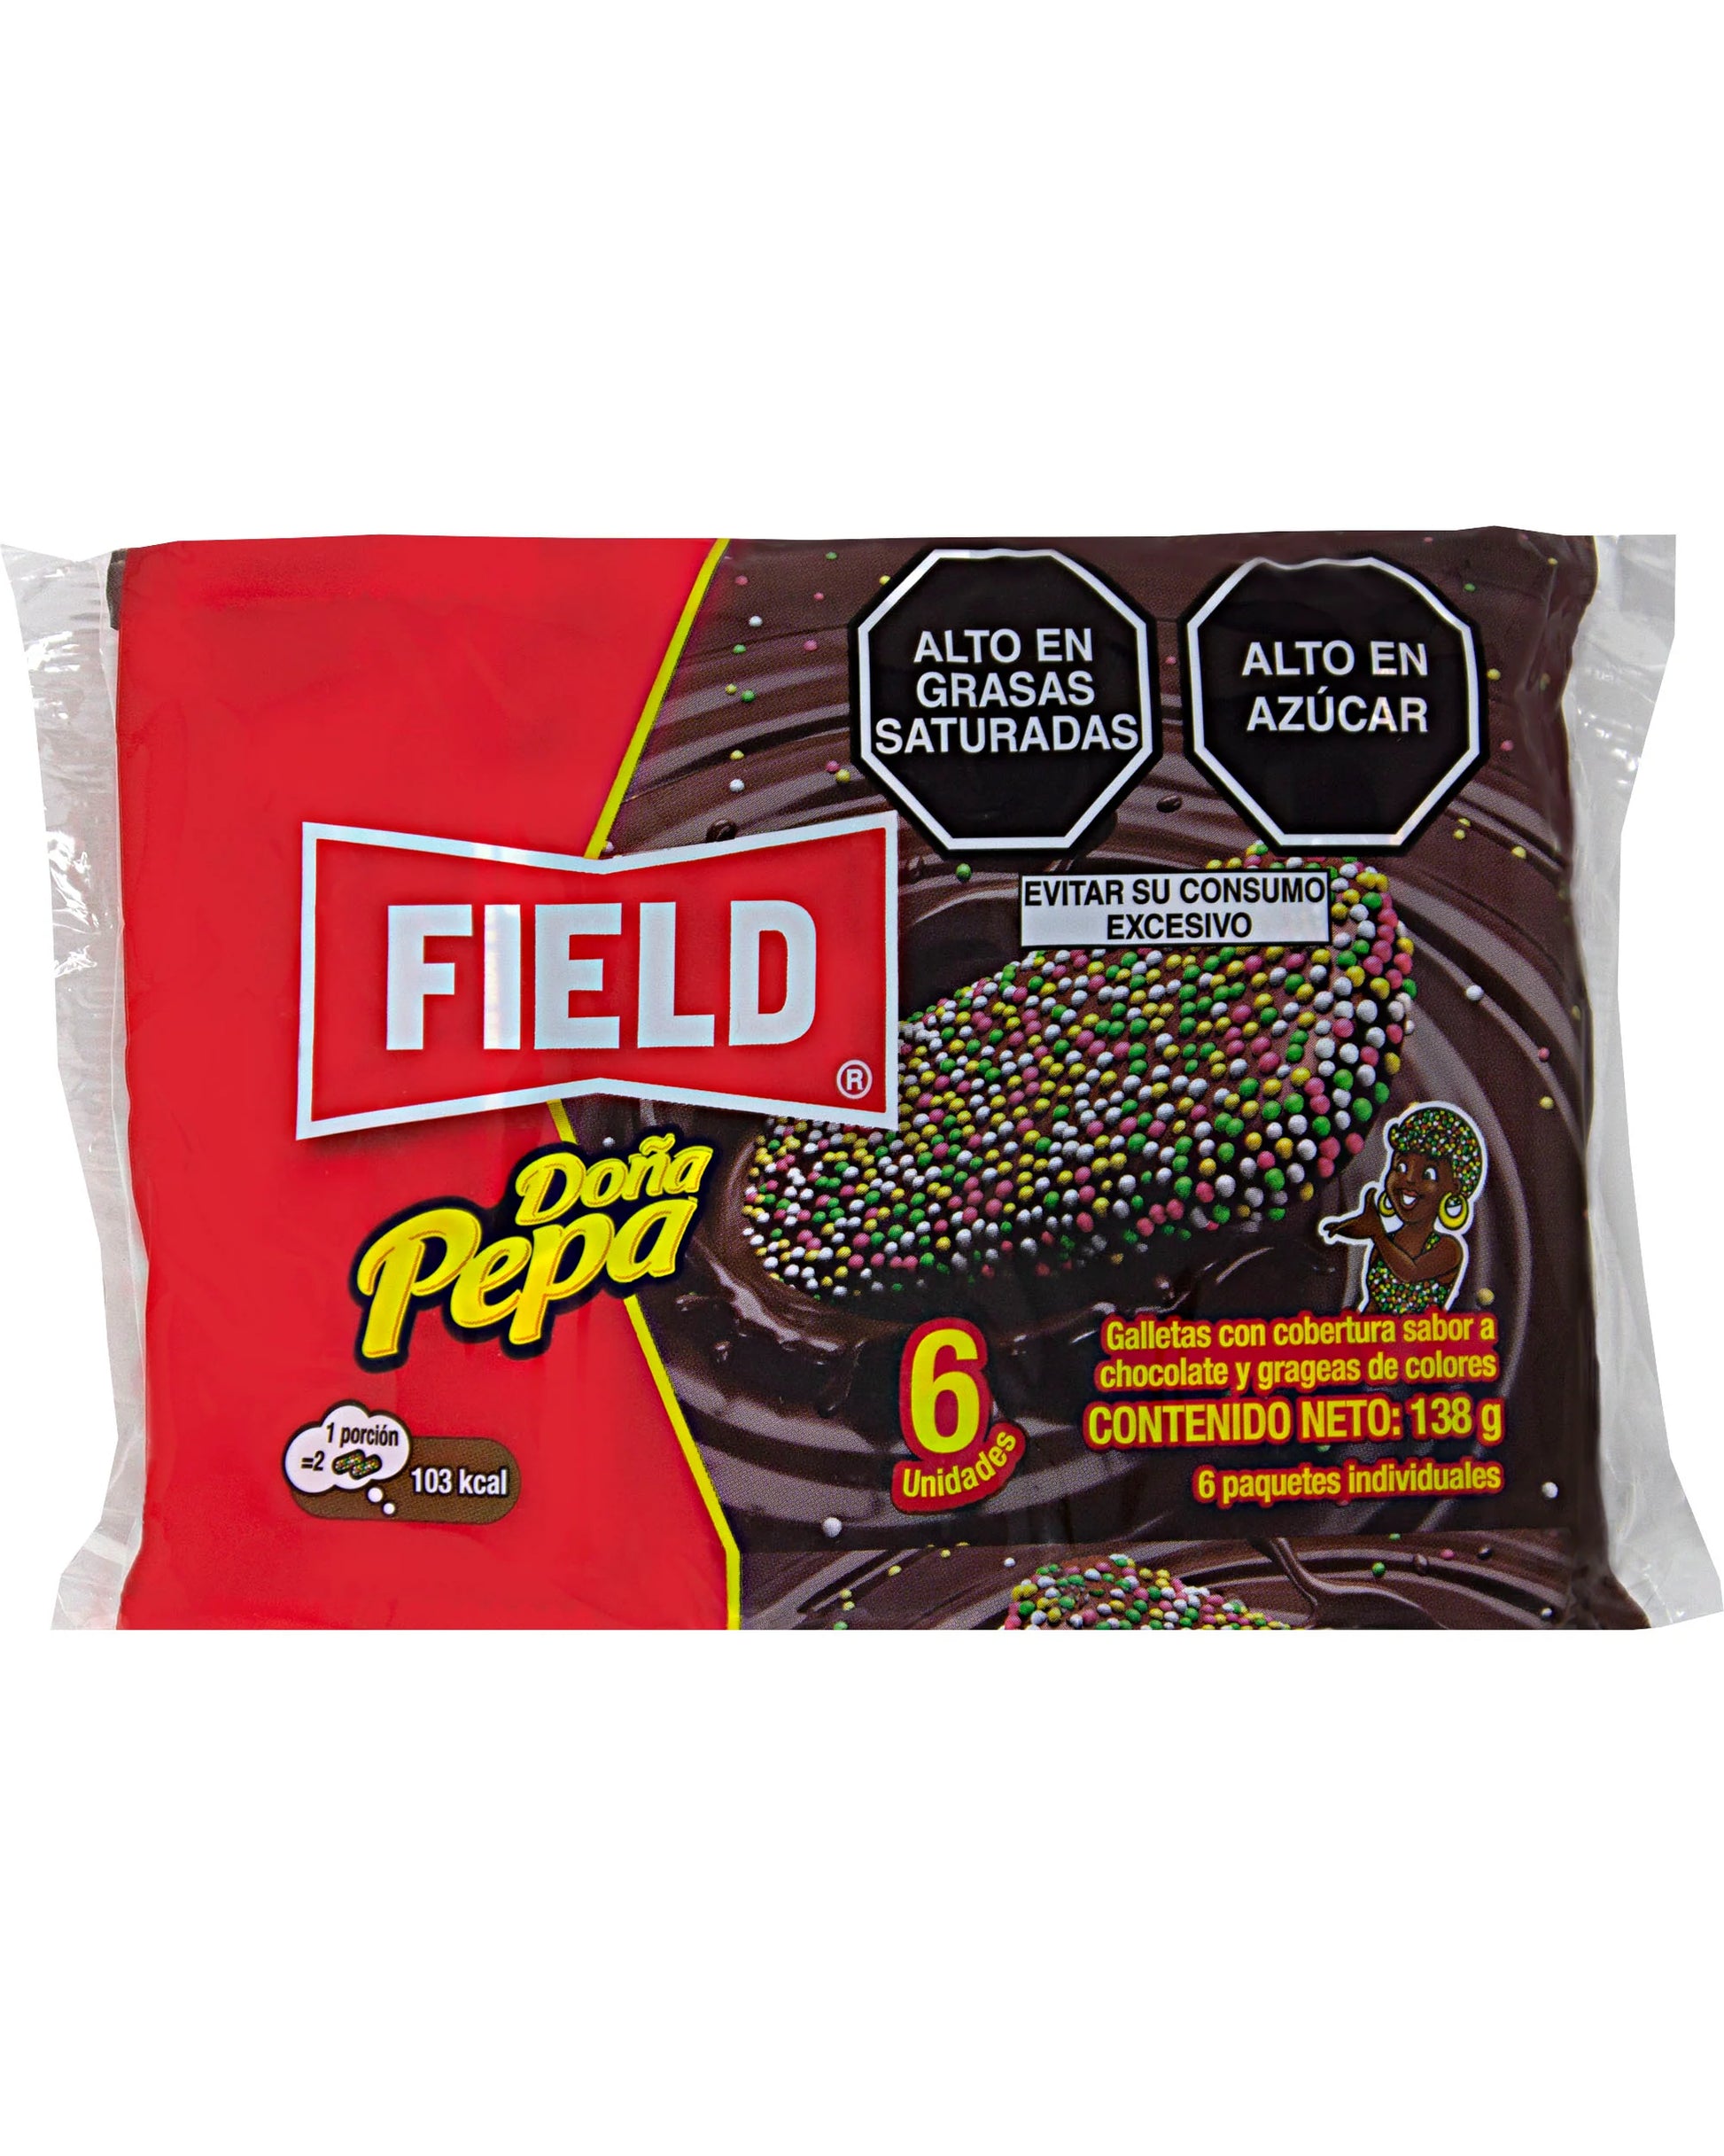 field-cookies-donas-pepa-6pck